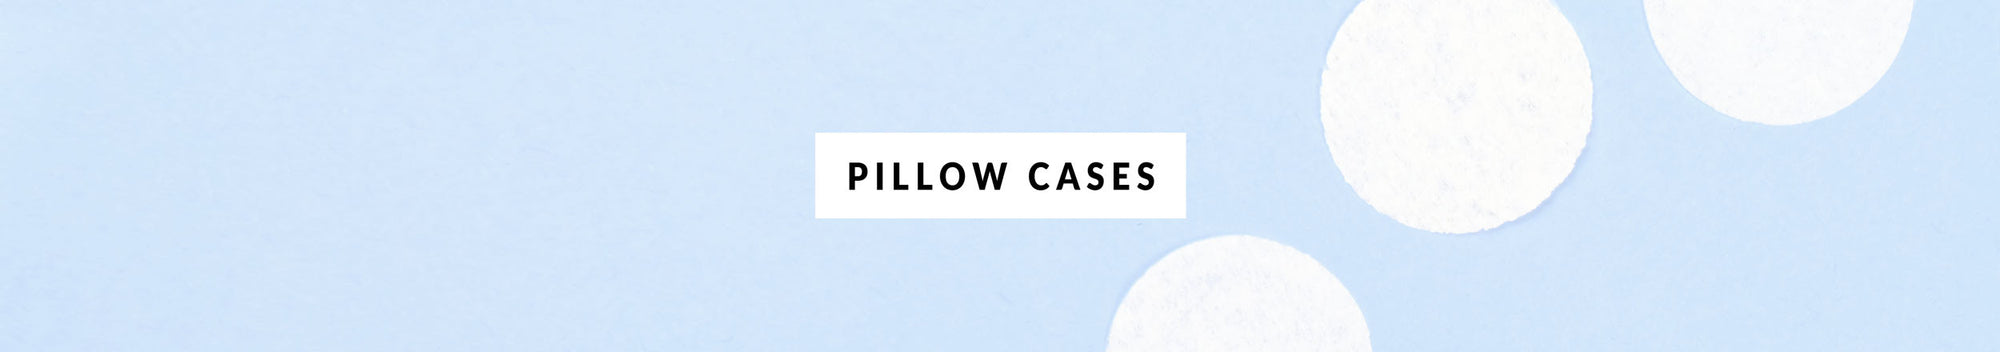 Pillow cases